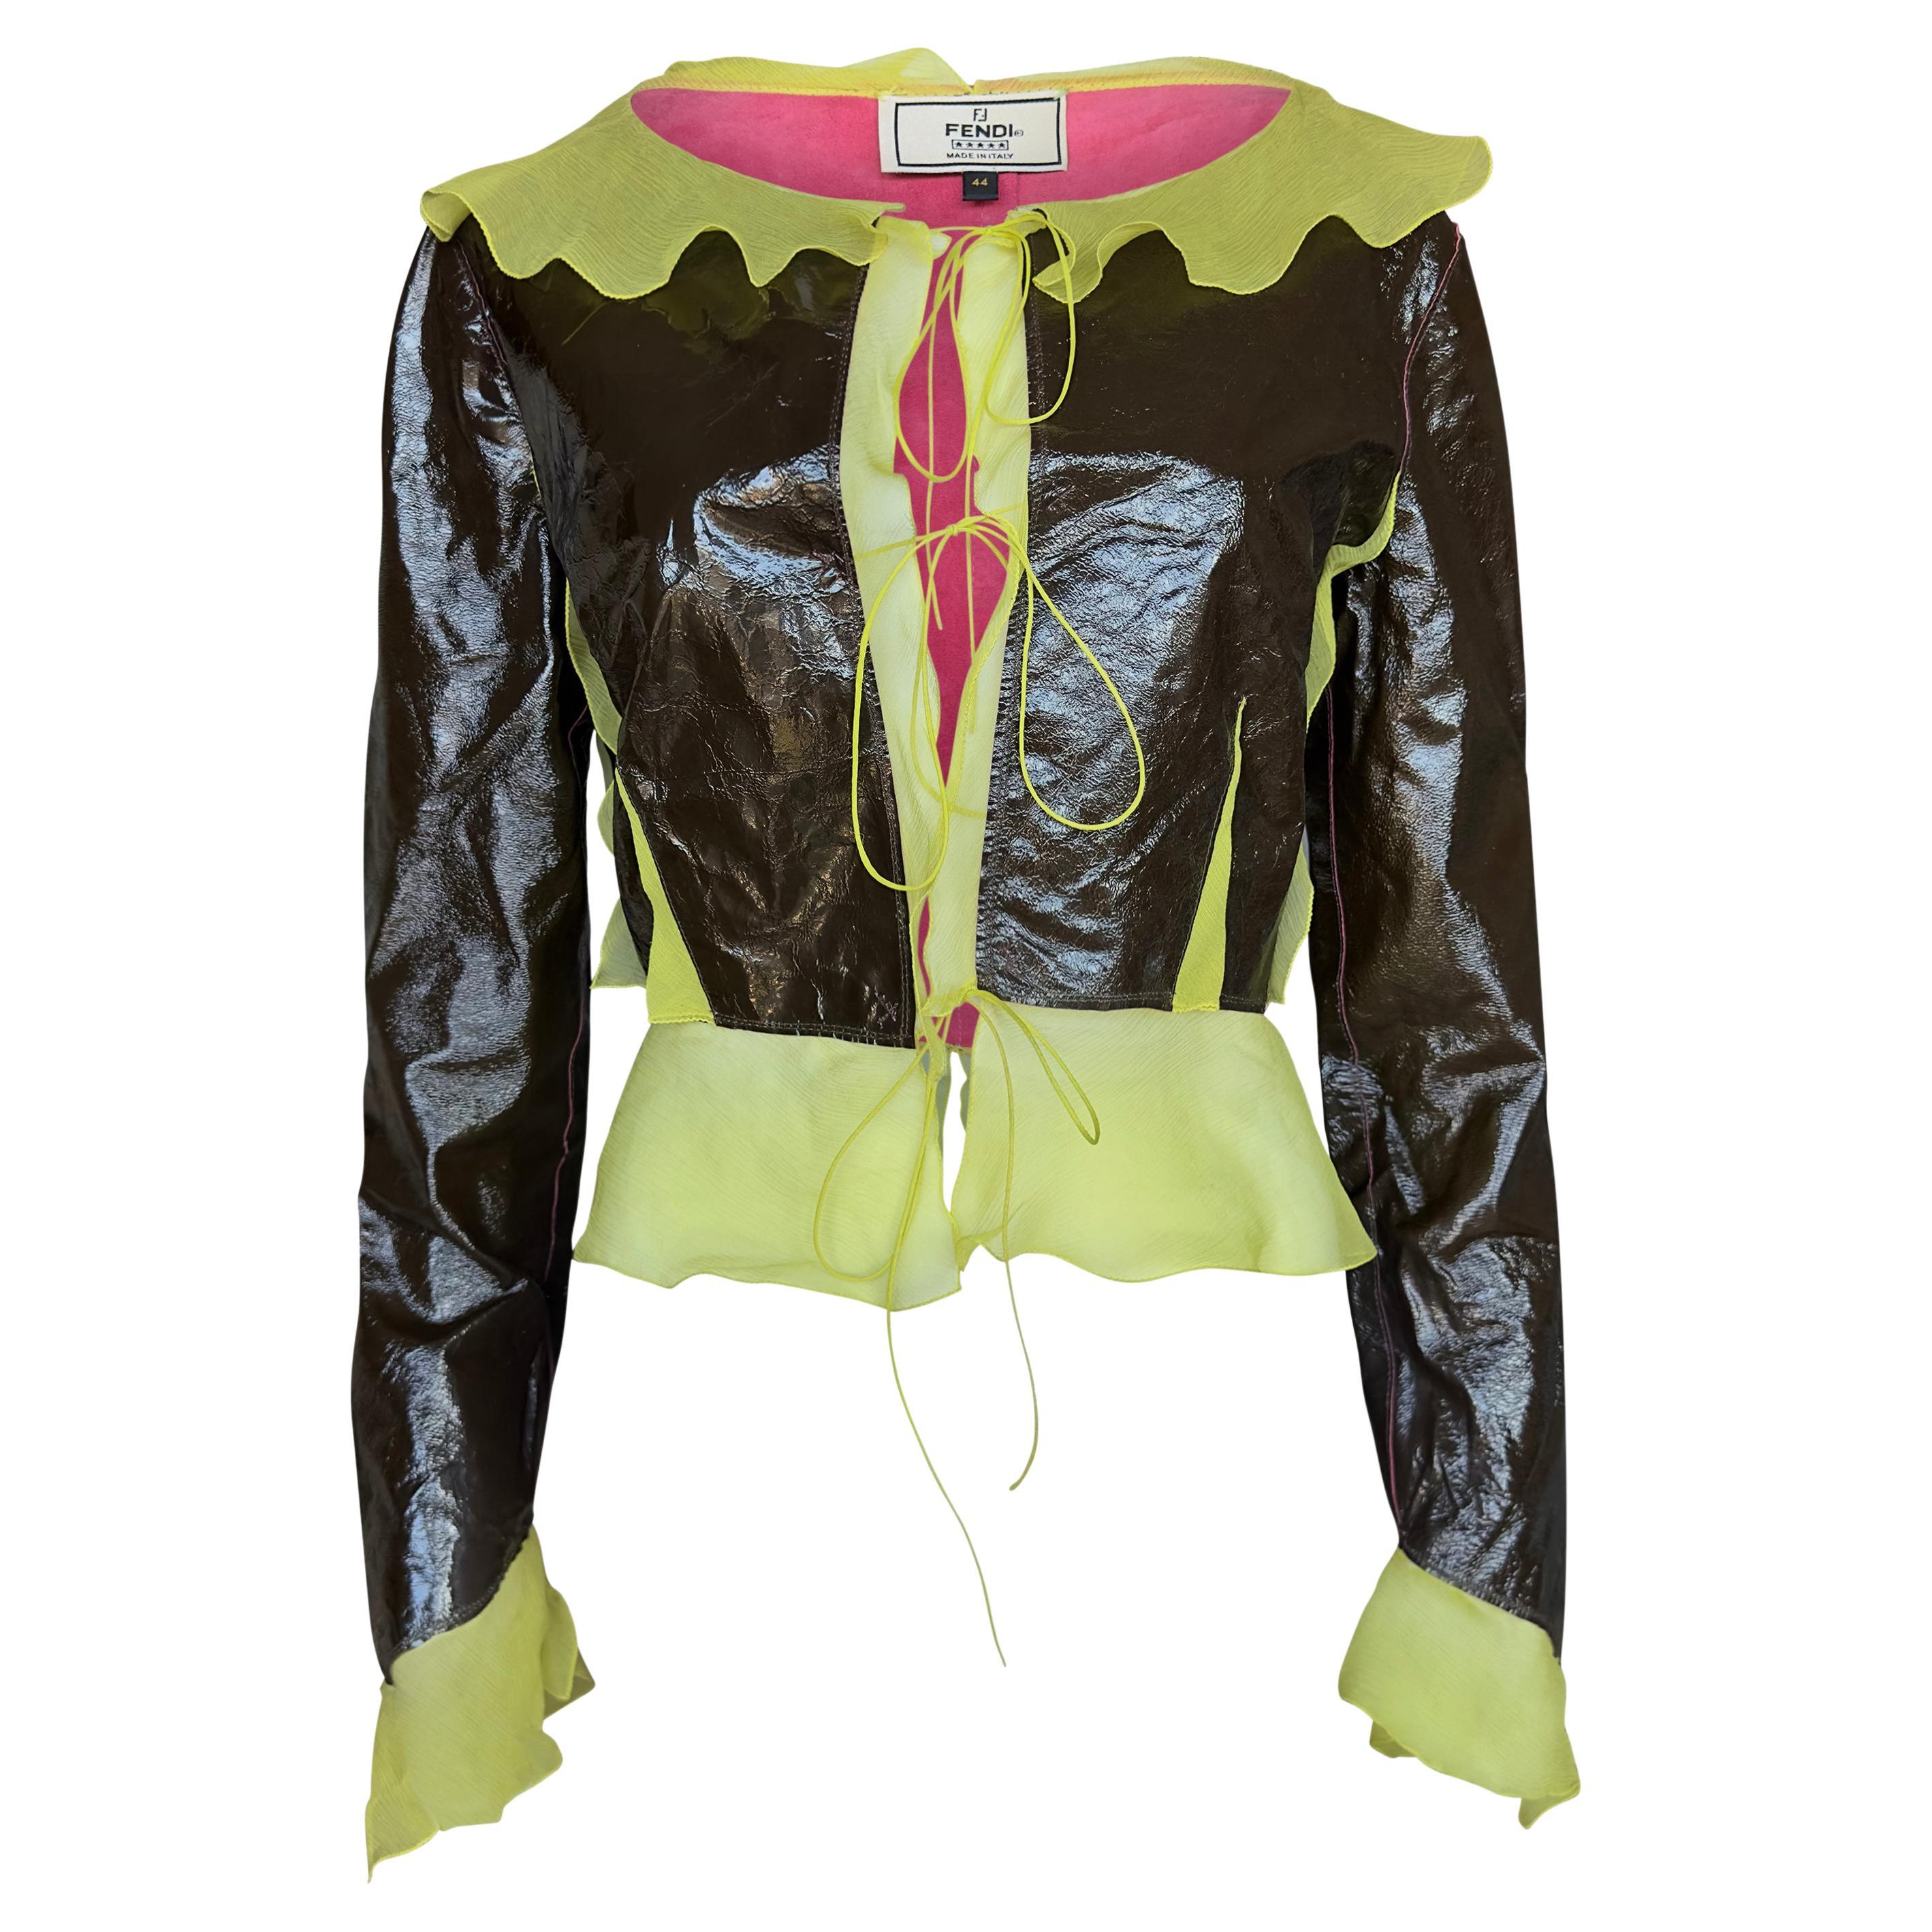 S/S 2000 Fendi by Karl Lagerfeld A Patent Leather Lime Silk Chiffon Jacket